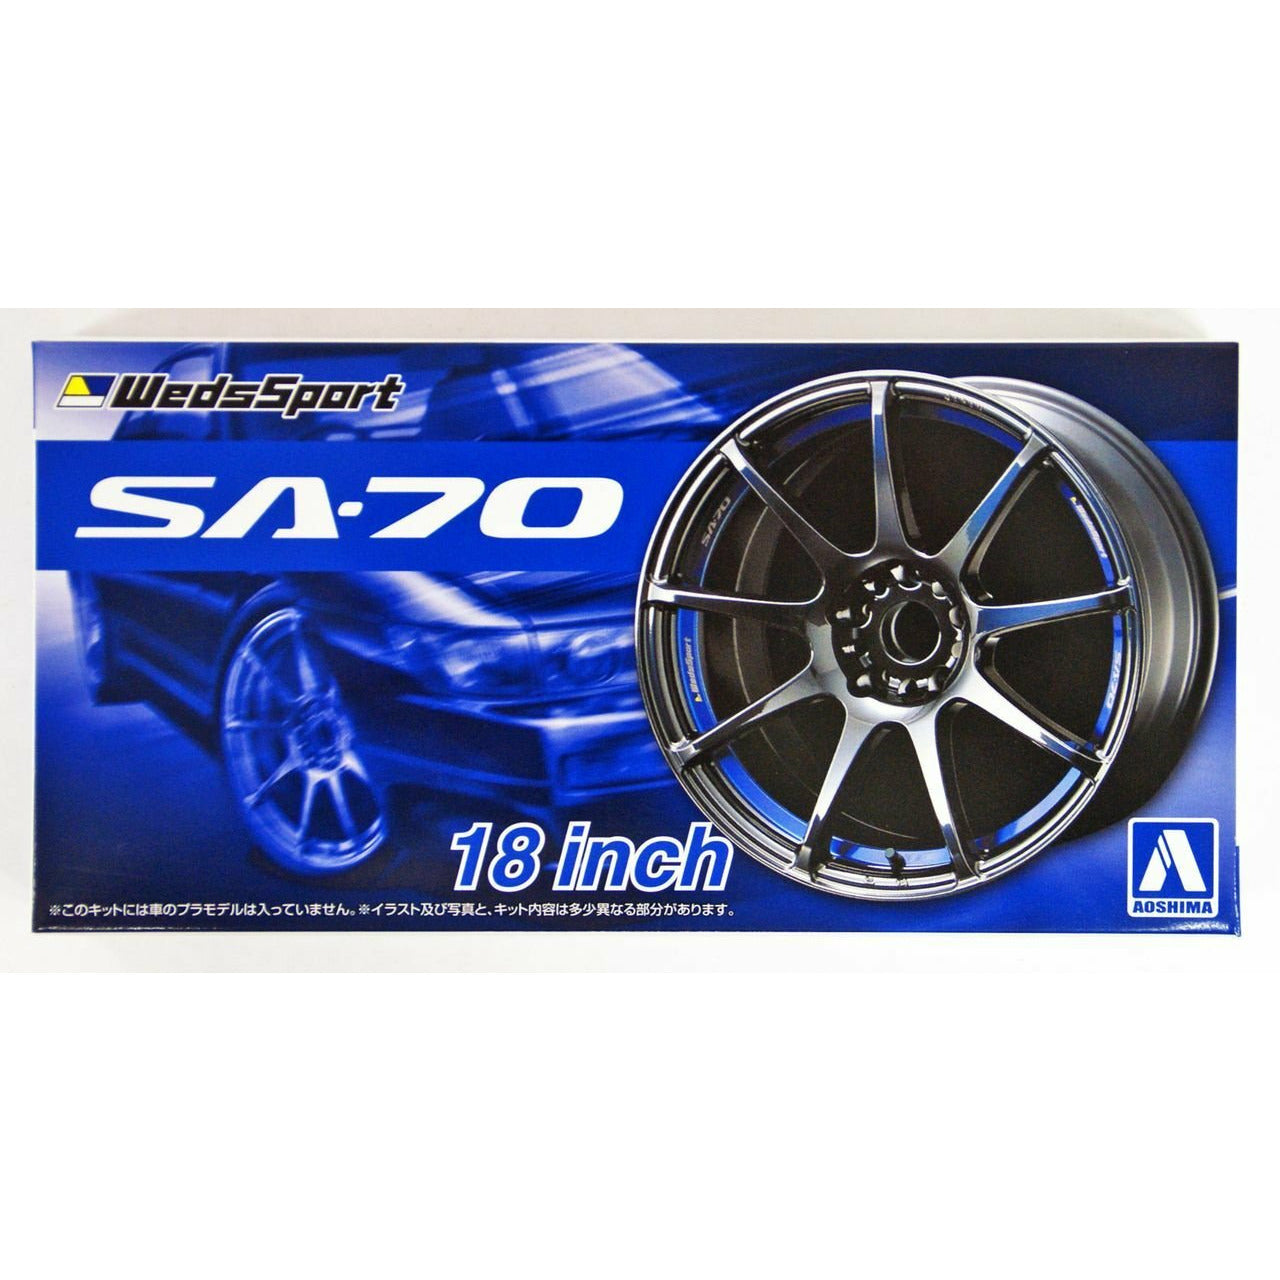 Weds Sports SA-70 18inch Wheel Parts 1/24 Car Accessory Model Kit #05463 by Aoshima